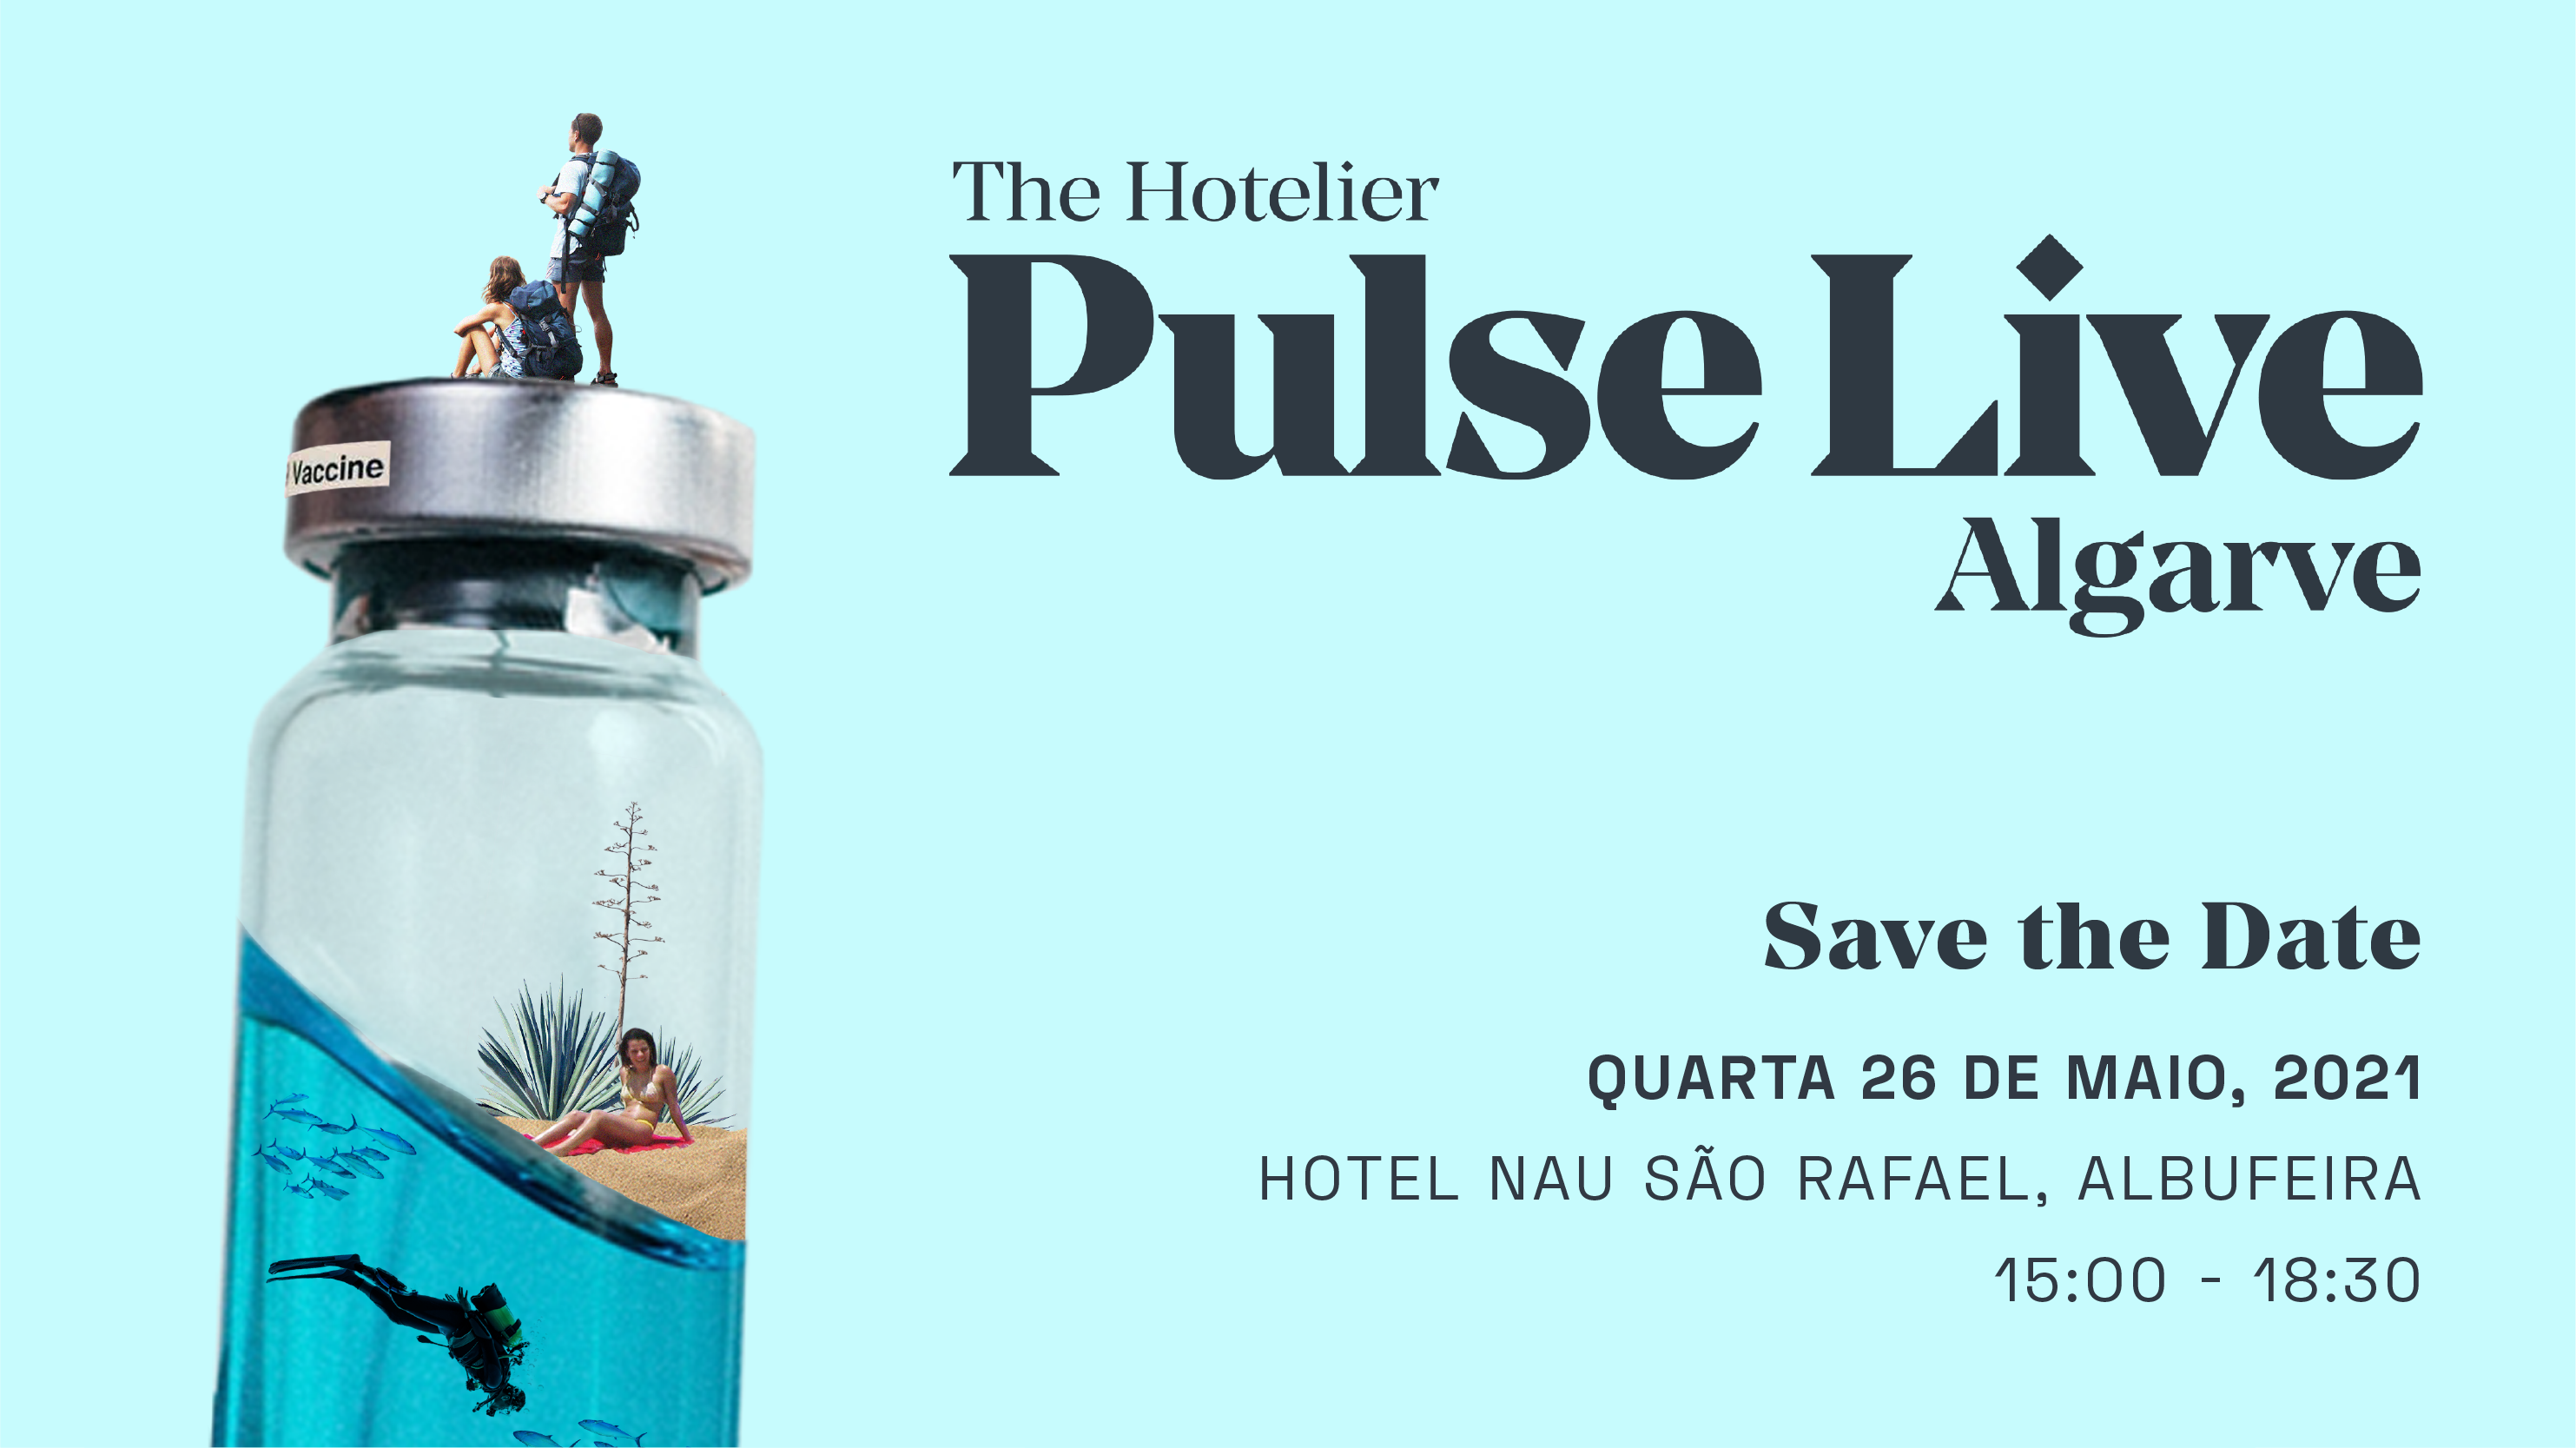 PULSE Live Algarve Banner, featuring people surfing inside of vaccine bottle